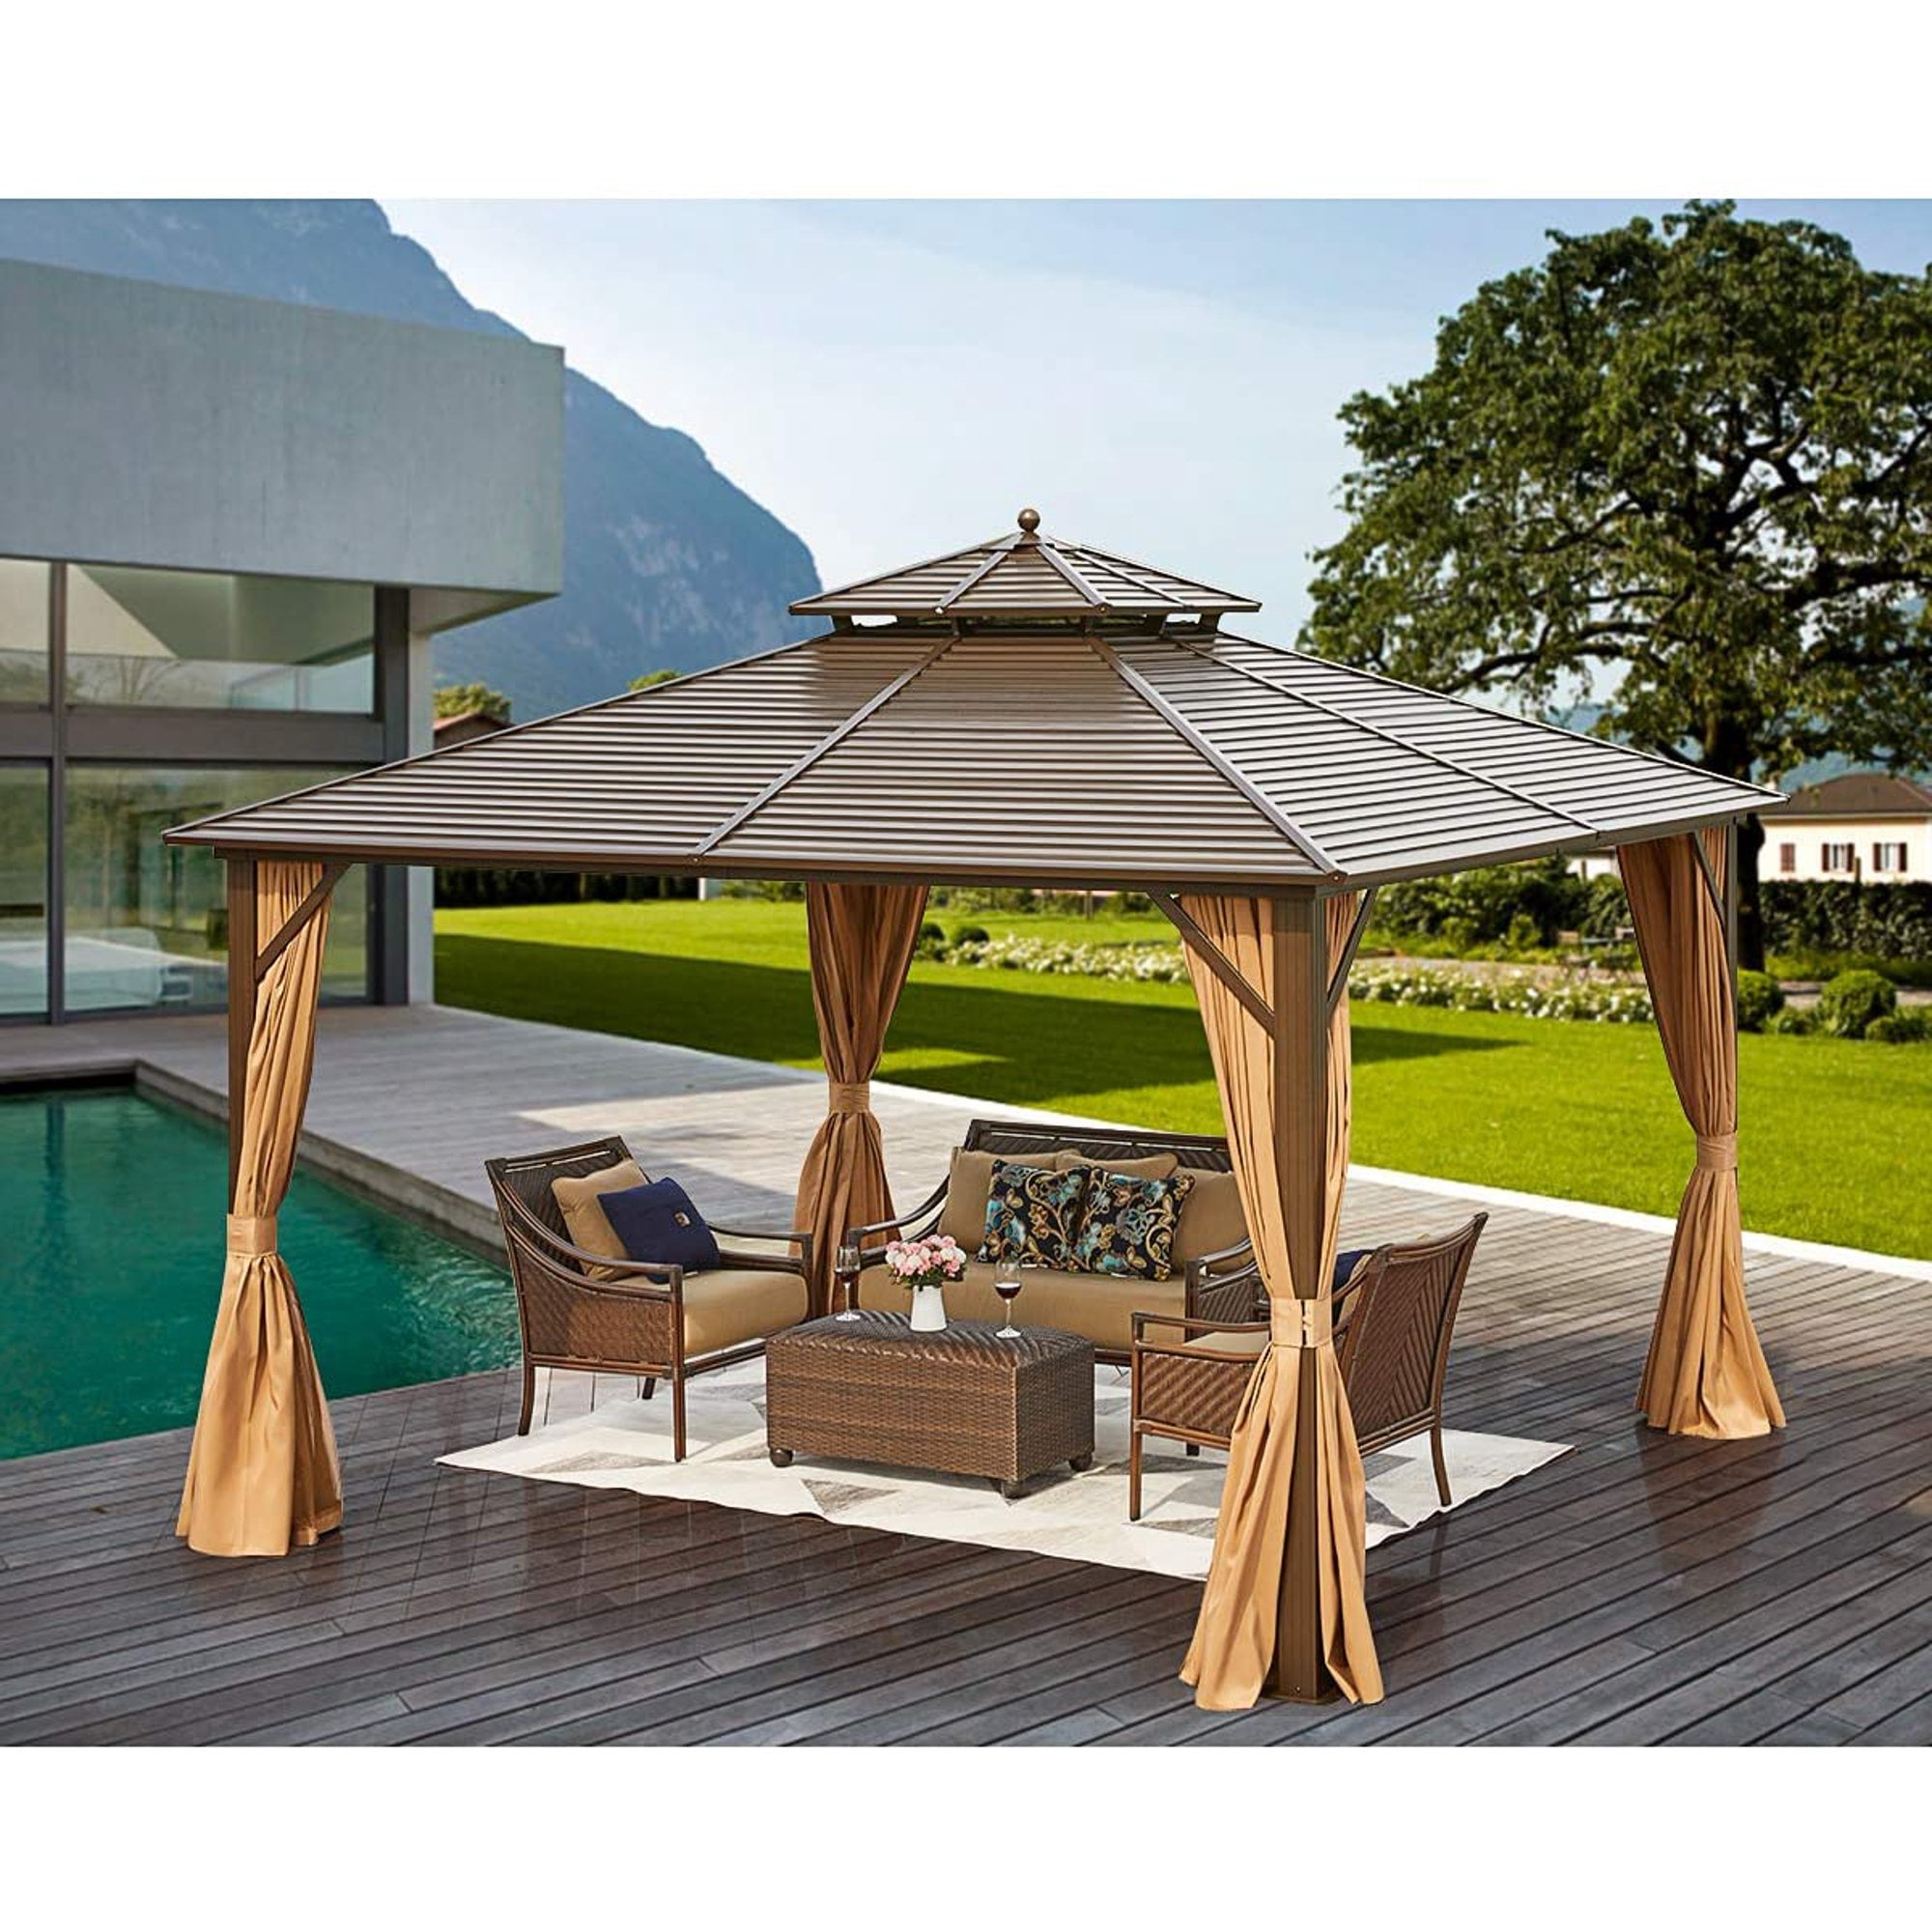 Outdoor Gazebo With Netting Canopy Backyard Pergola 10 x 12 Garden Patio Wedding 